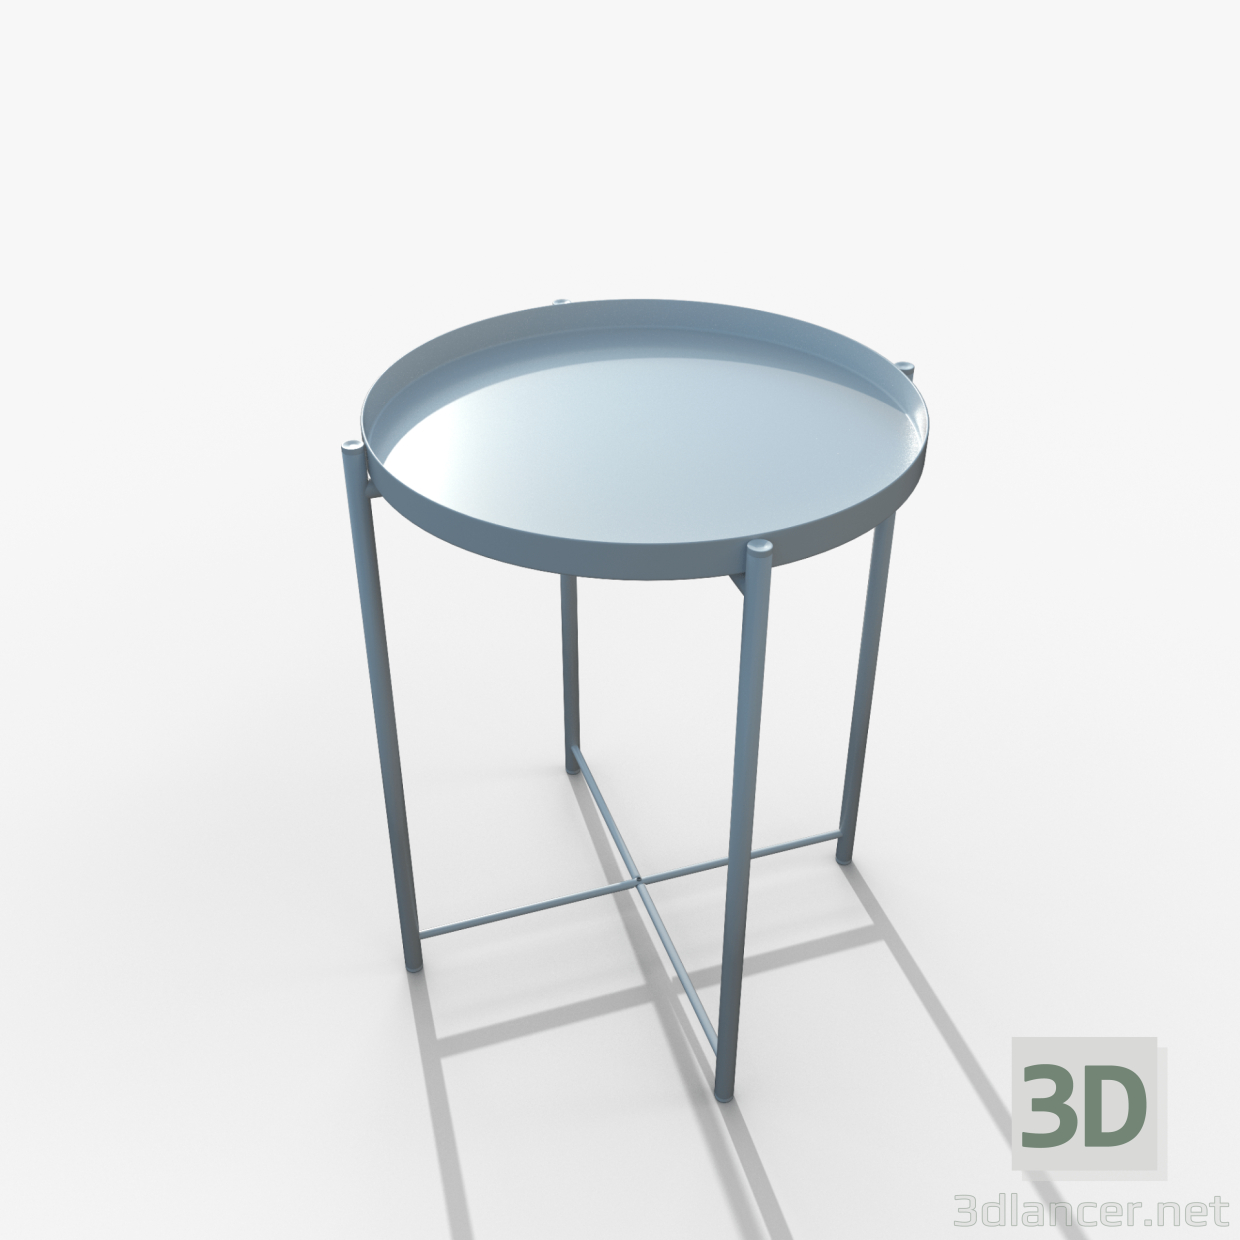 3d Gladom table white IKEA model buy - render